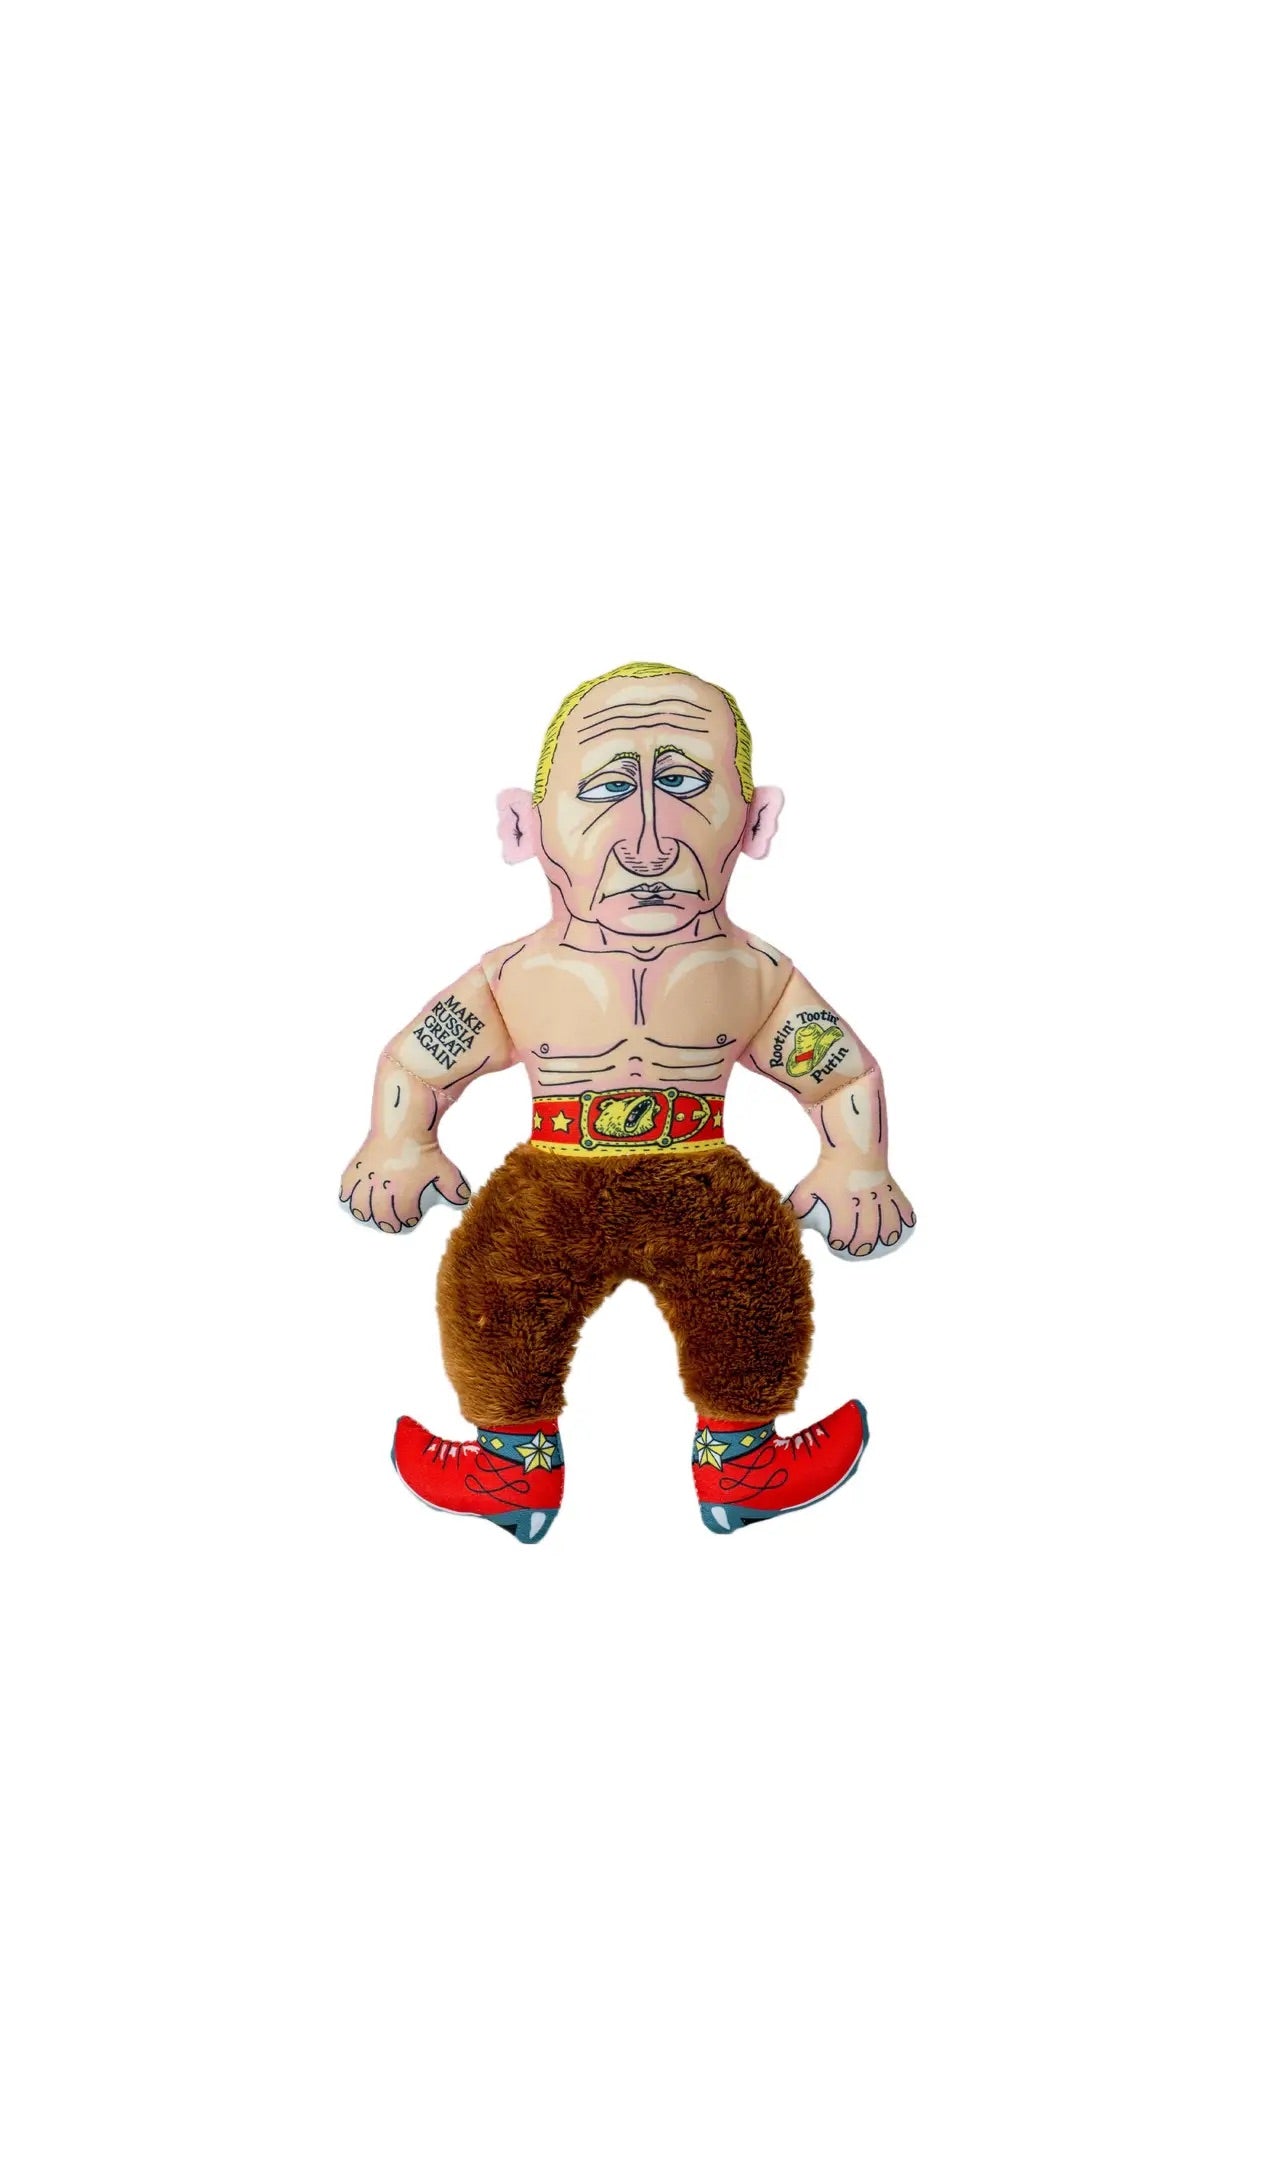 Political Parody Cat Toy - small Rootin' Tootin' Putin